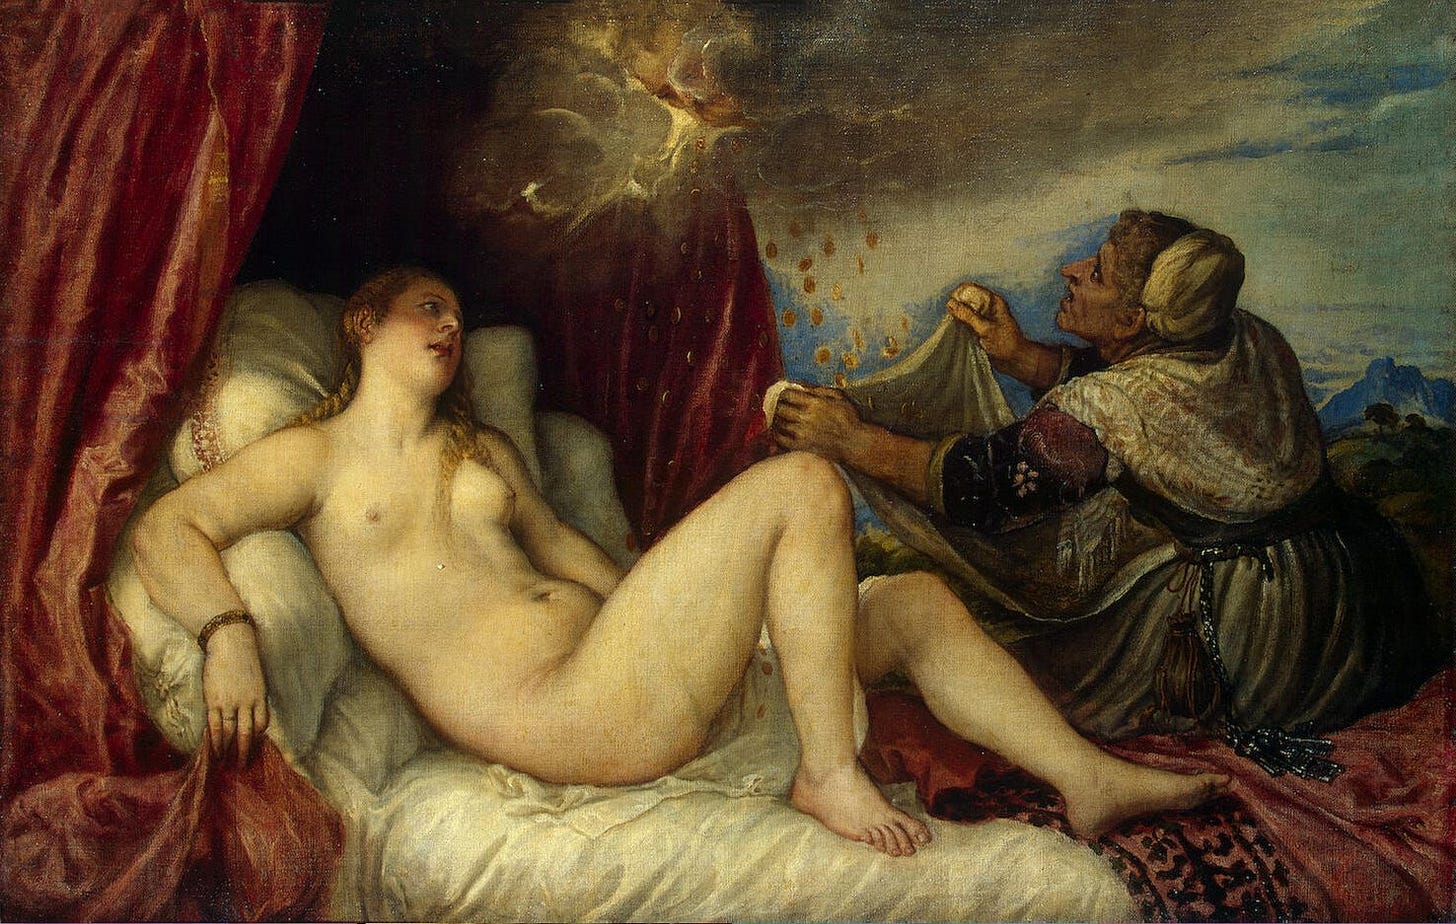 Titian, Danae with Jupiter as a "golden shower"